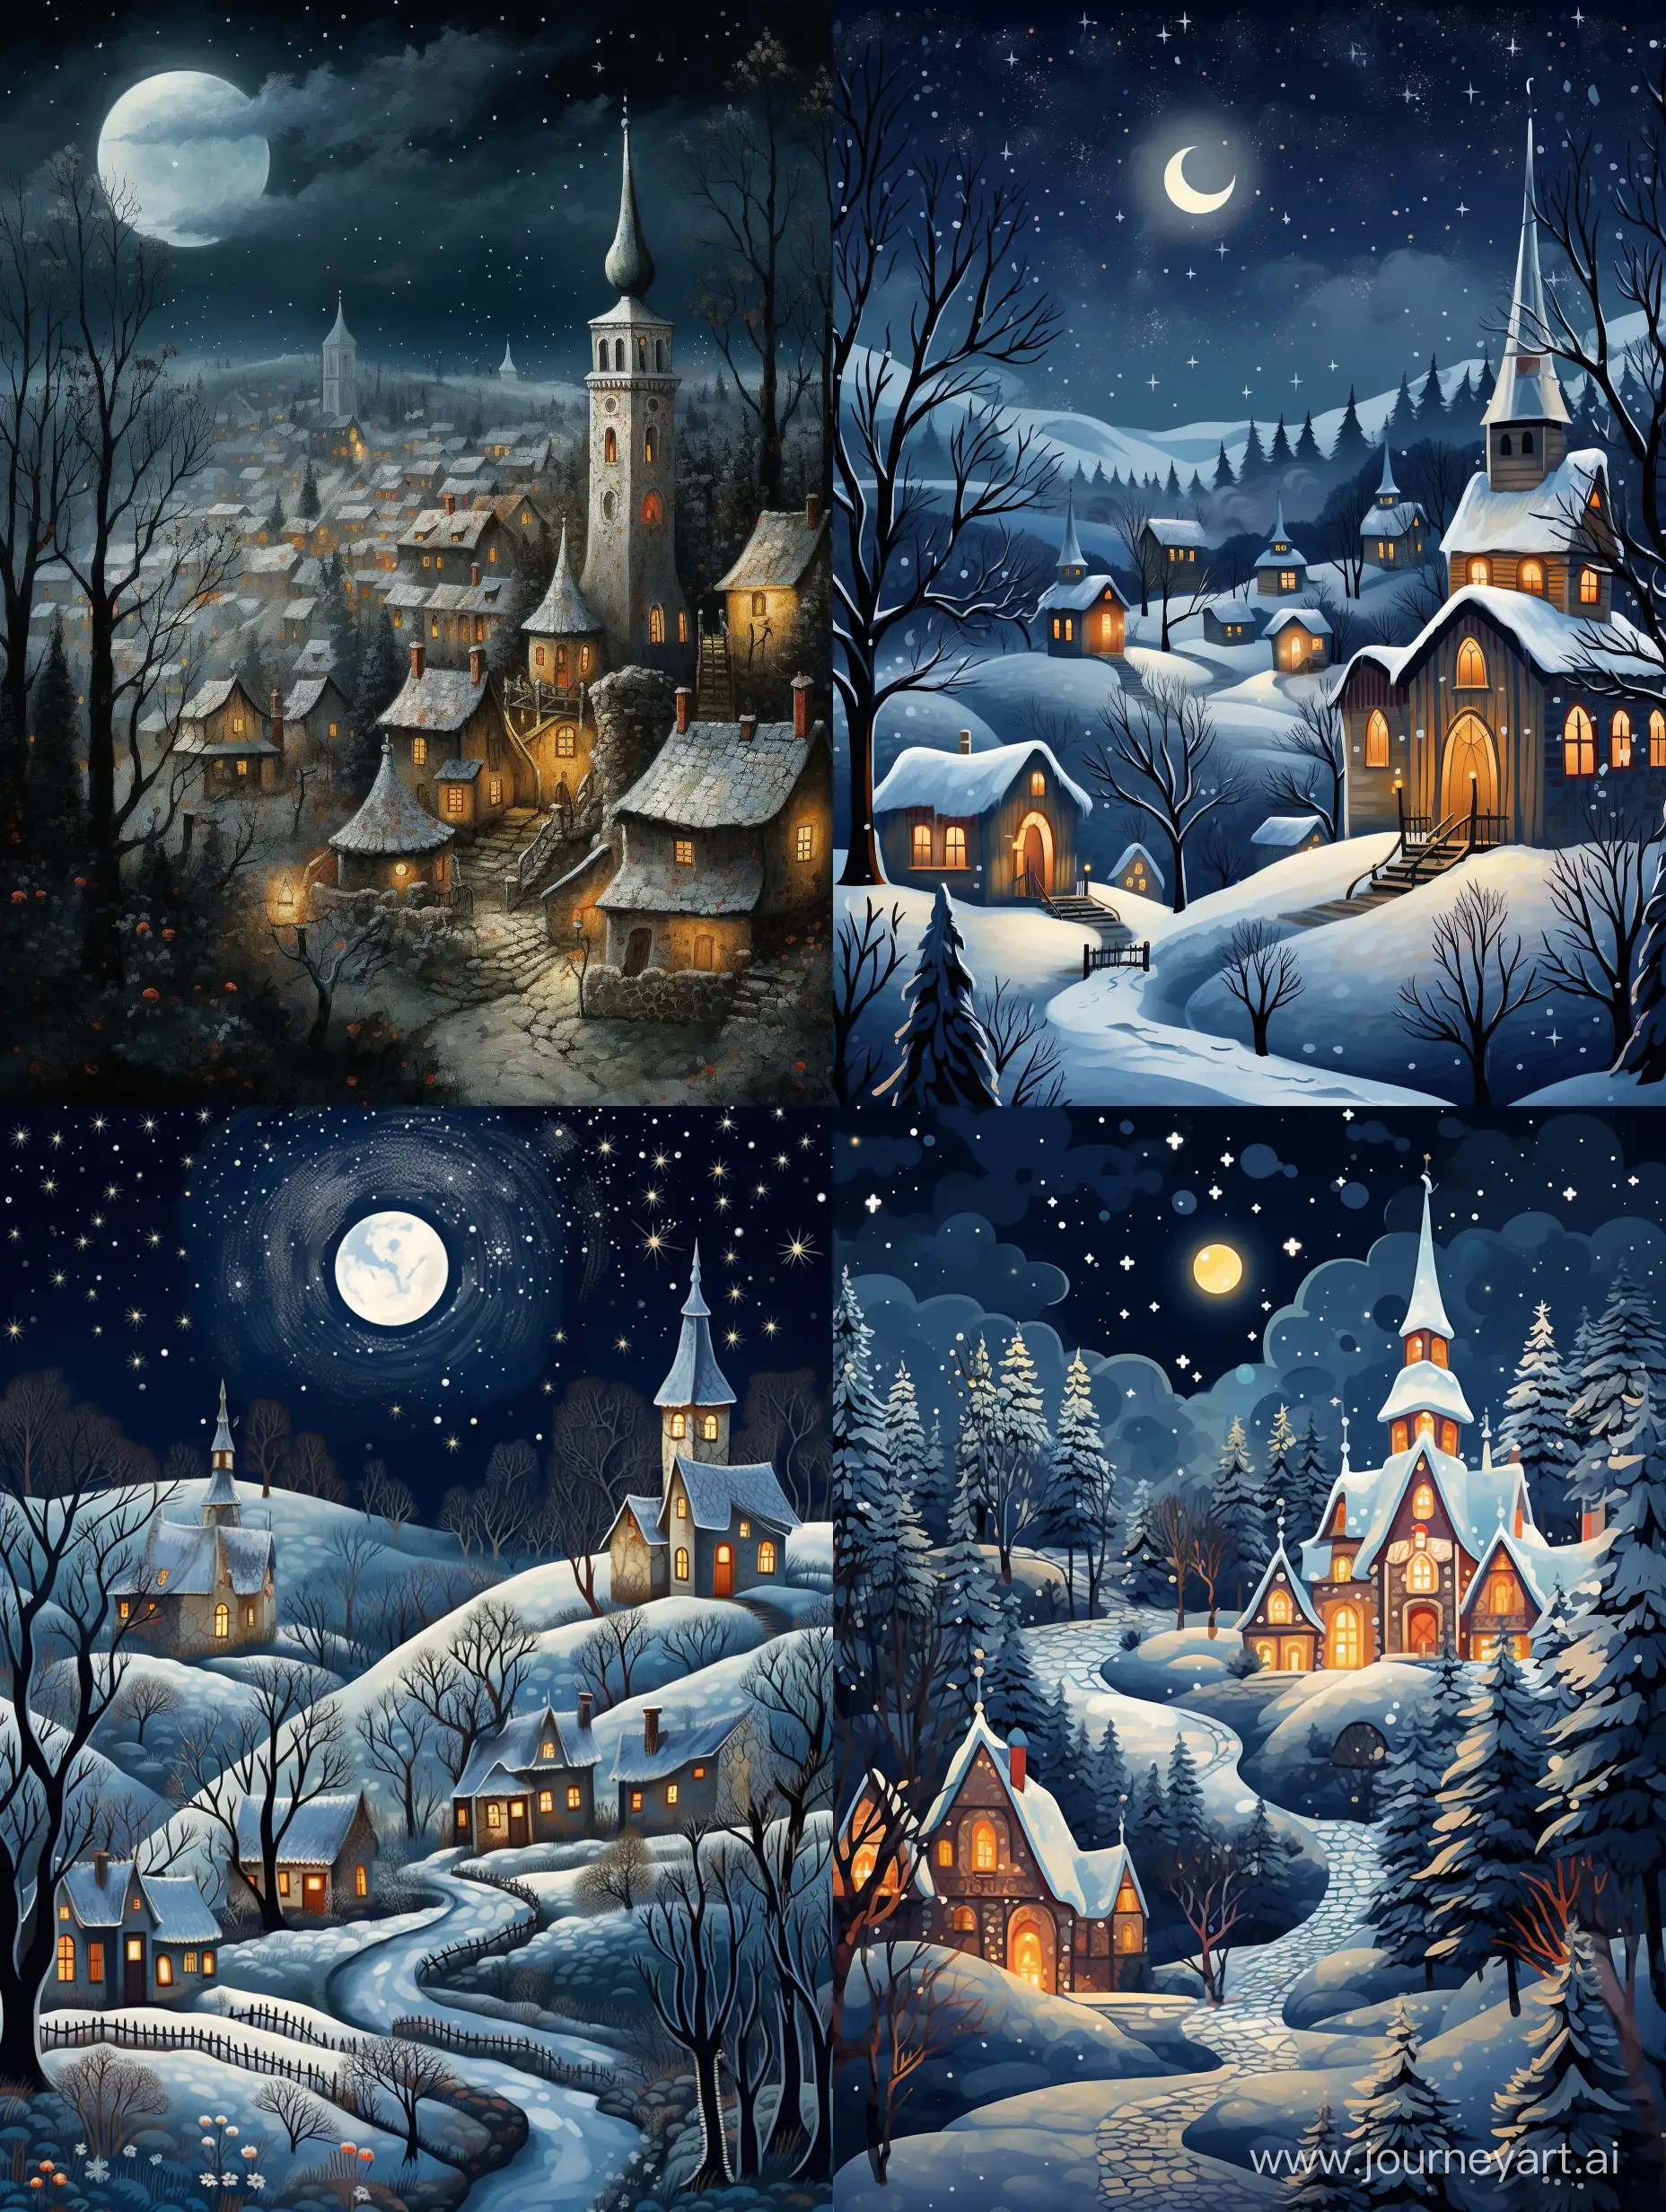 Christmas moonlit night, folk festivities, ancient village, beautiful church